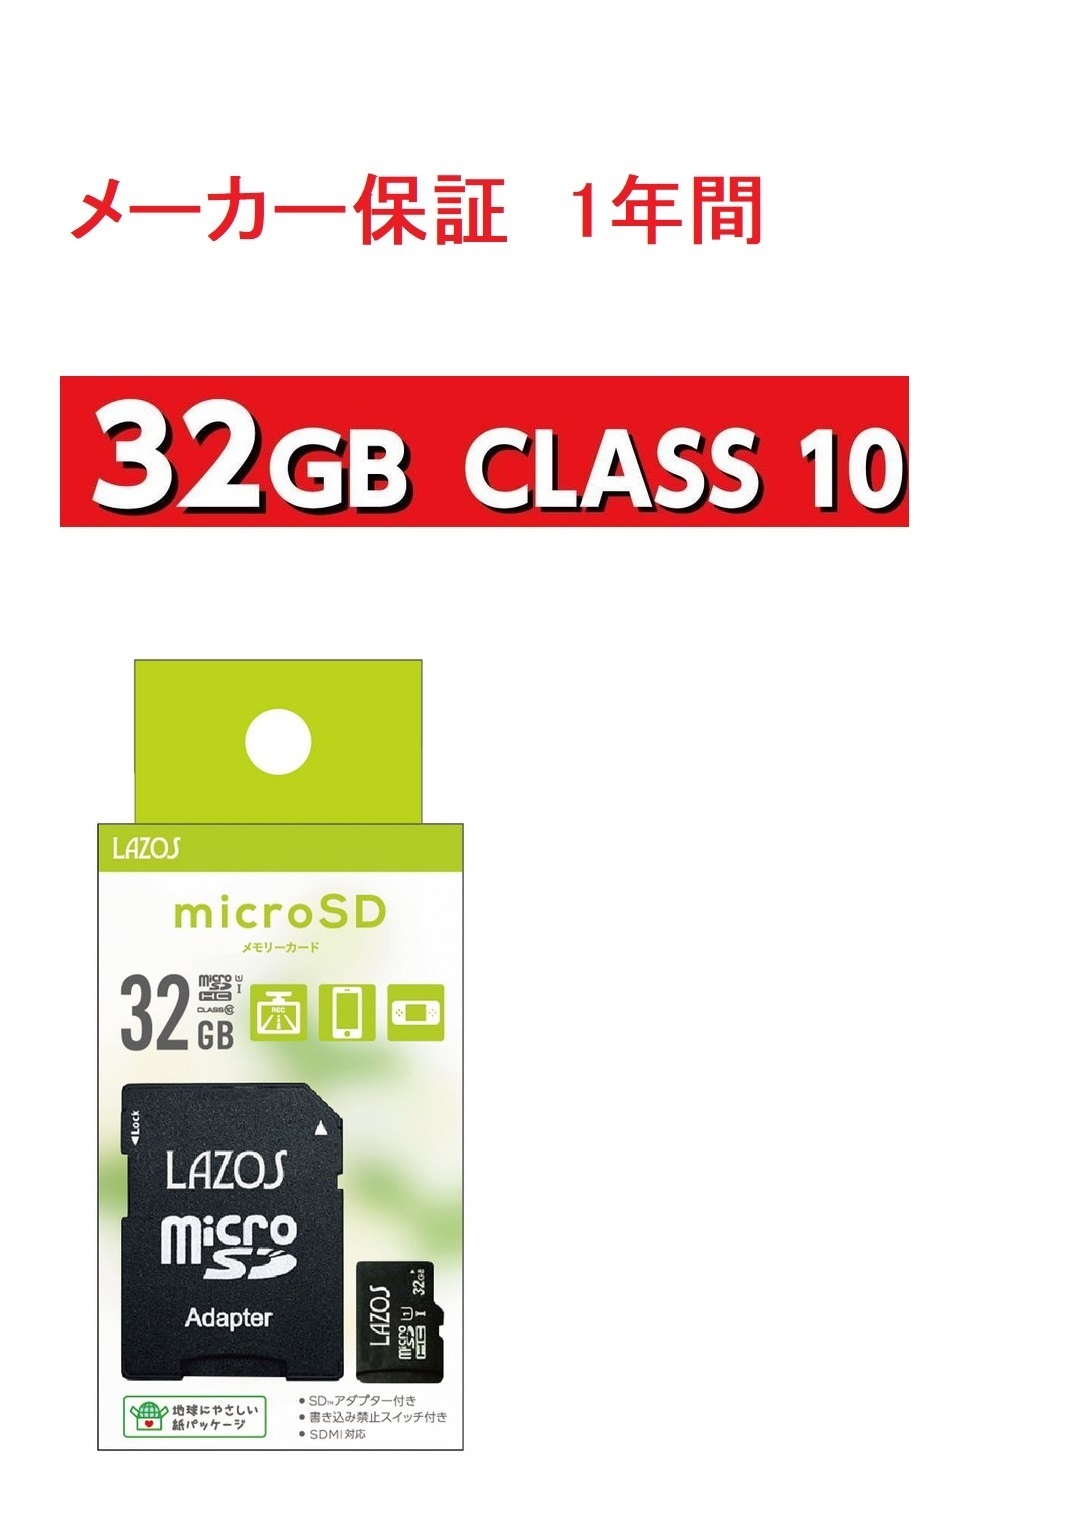 LAZOS micro SD card MicroSD sd card 32 memory card micro SDHC micro SD card memory card 32GB CLASS10